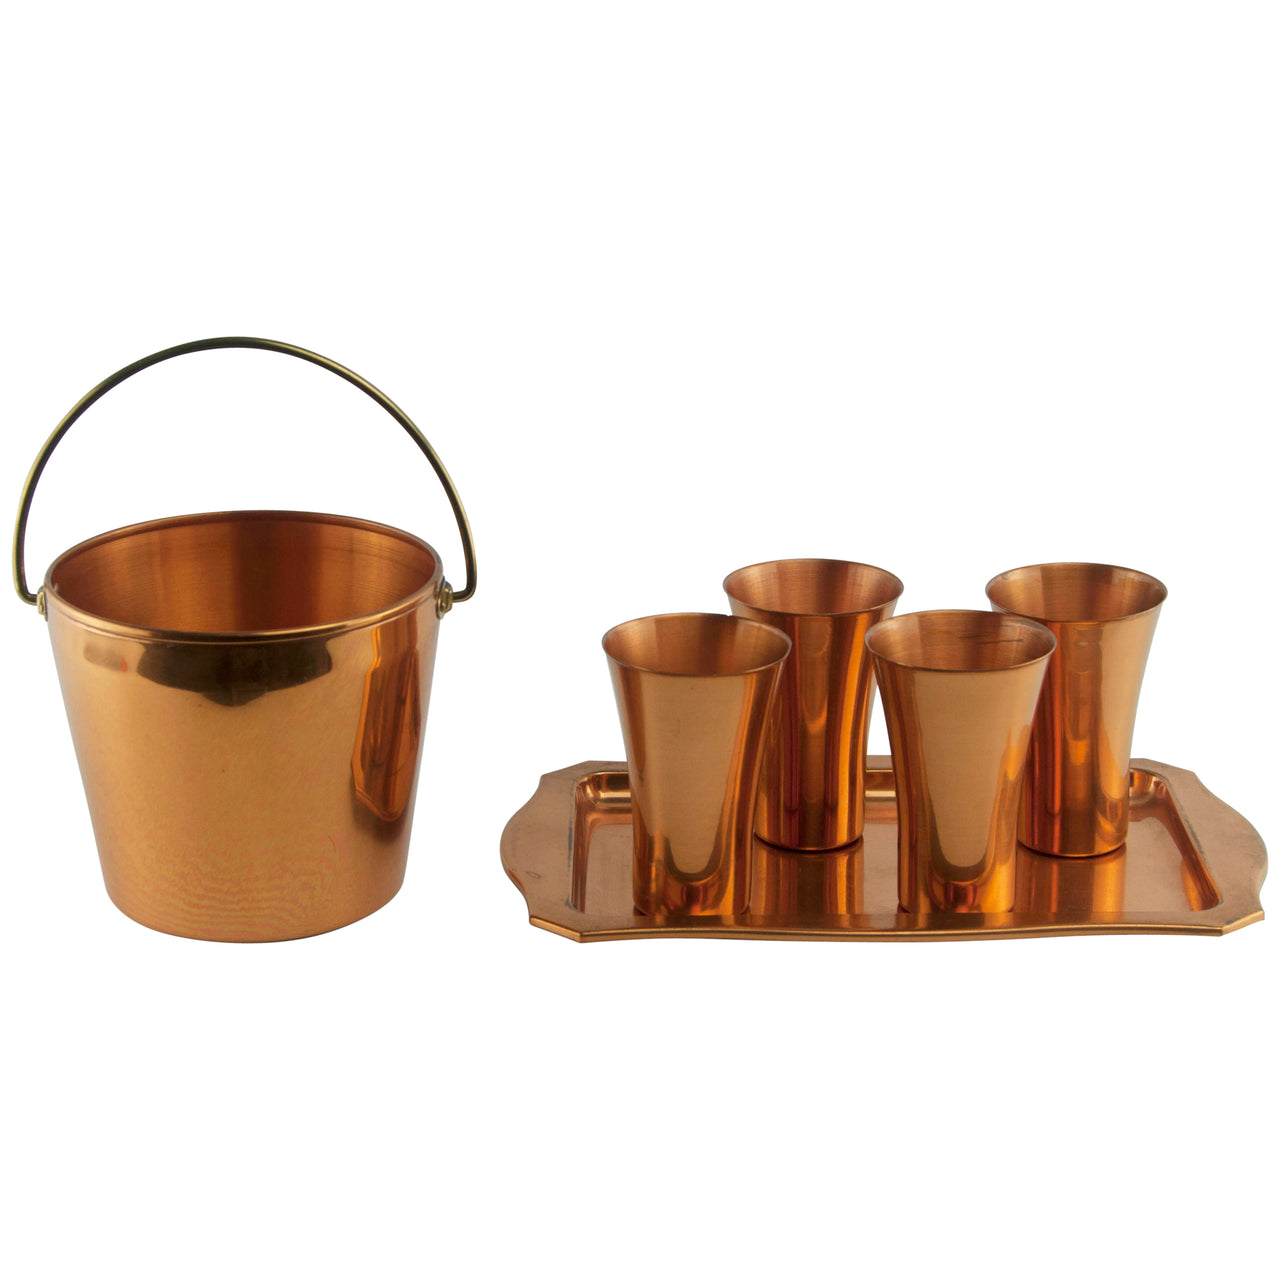 West Bend Copper Bucket Set | The Hour Shop Vintage Barware